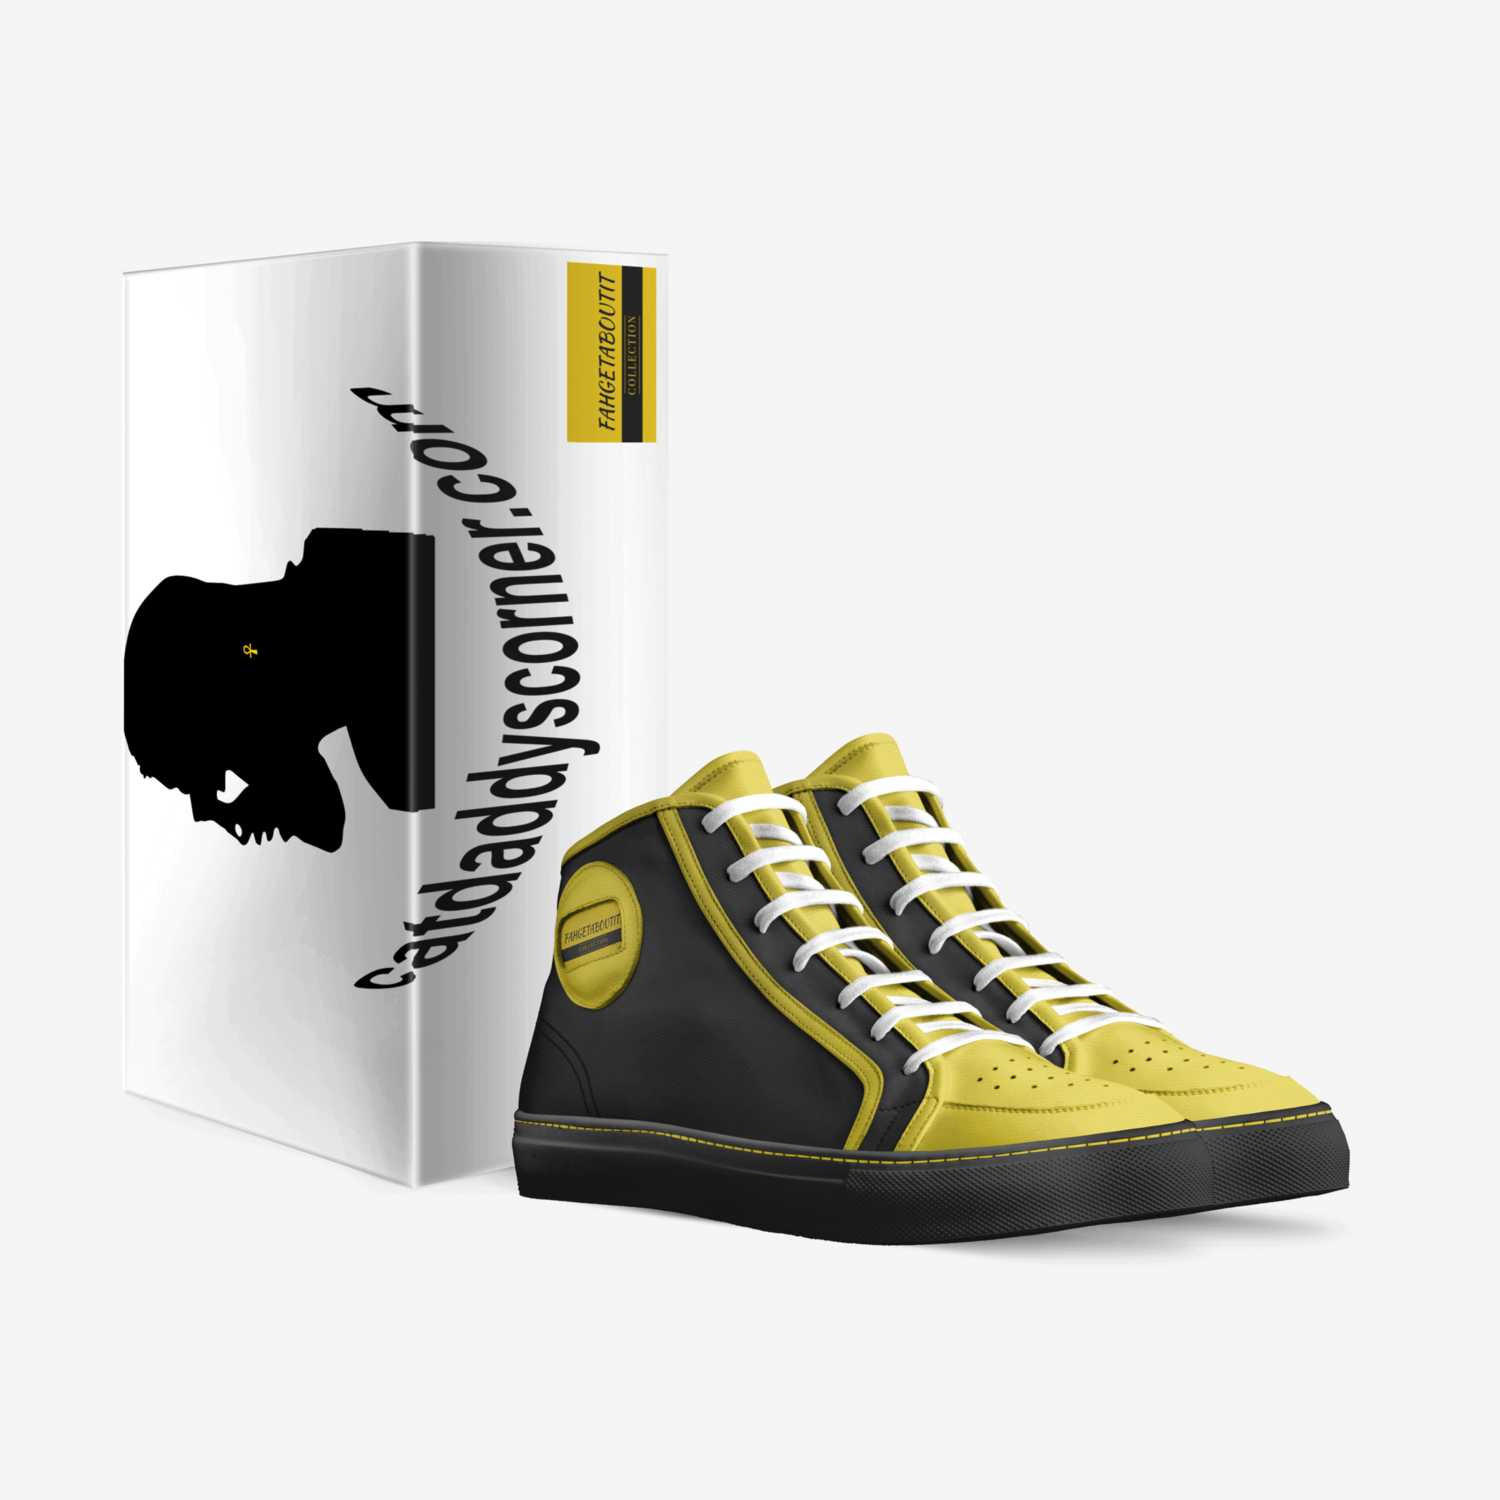 Killer B's custom made in Italy shoes by Scott Thomas | Box view